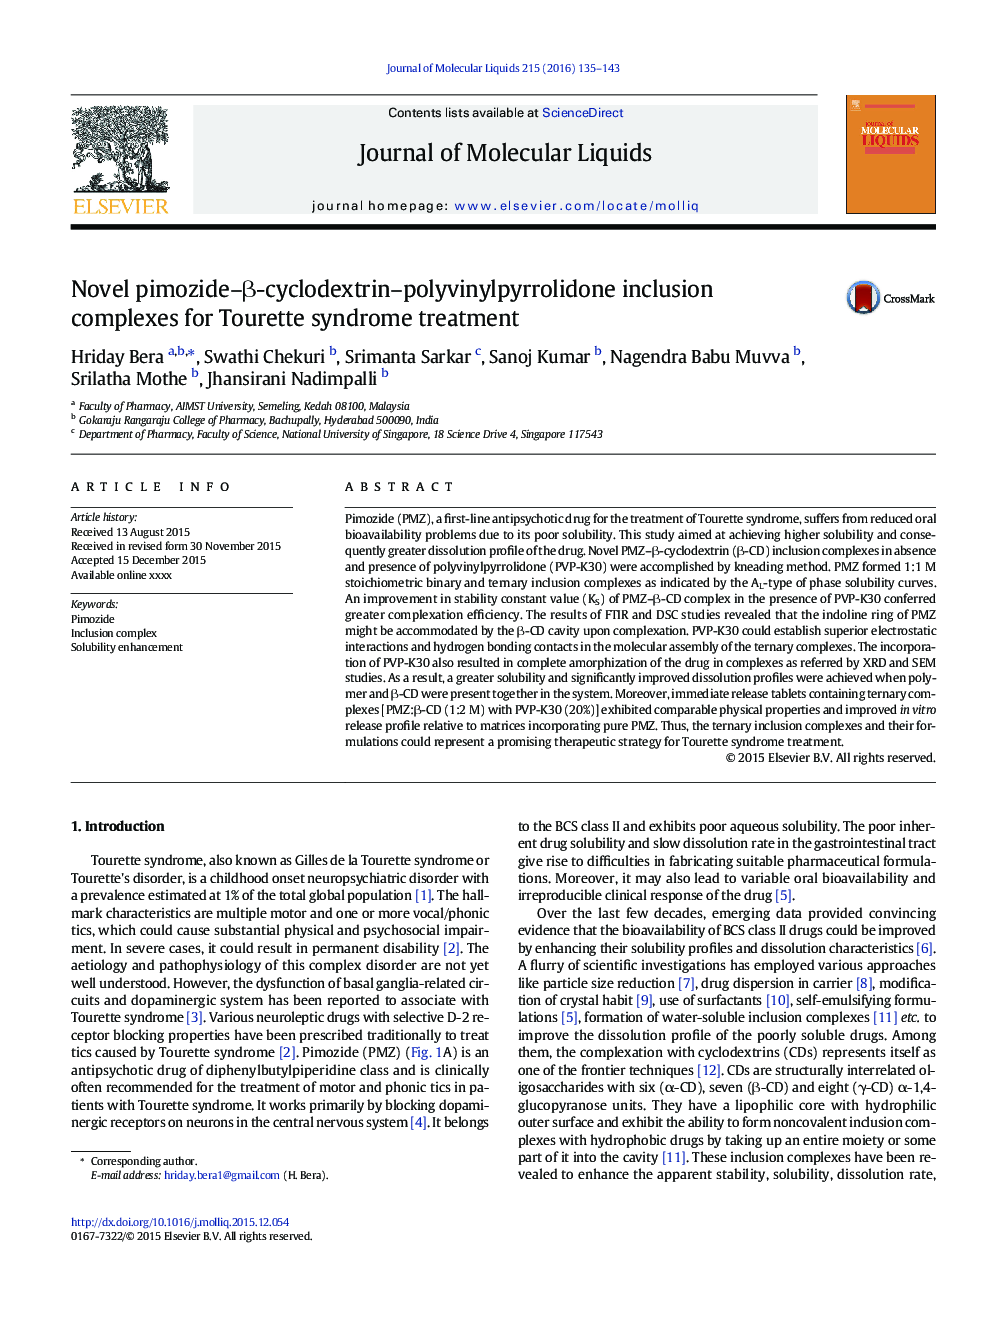 Novel pimozide-Î²-cyclodextrin-polyvinylpyrrolidone inclusion complexes for Tourette syndrome treatment